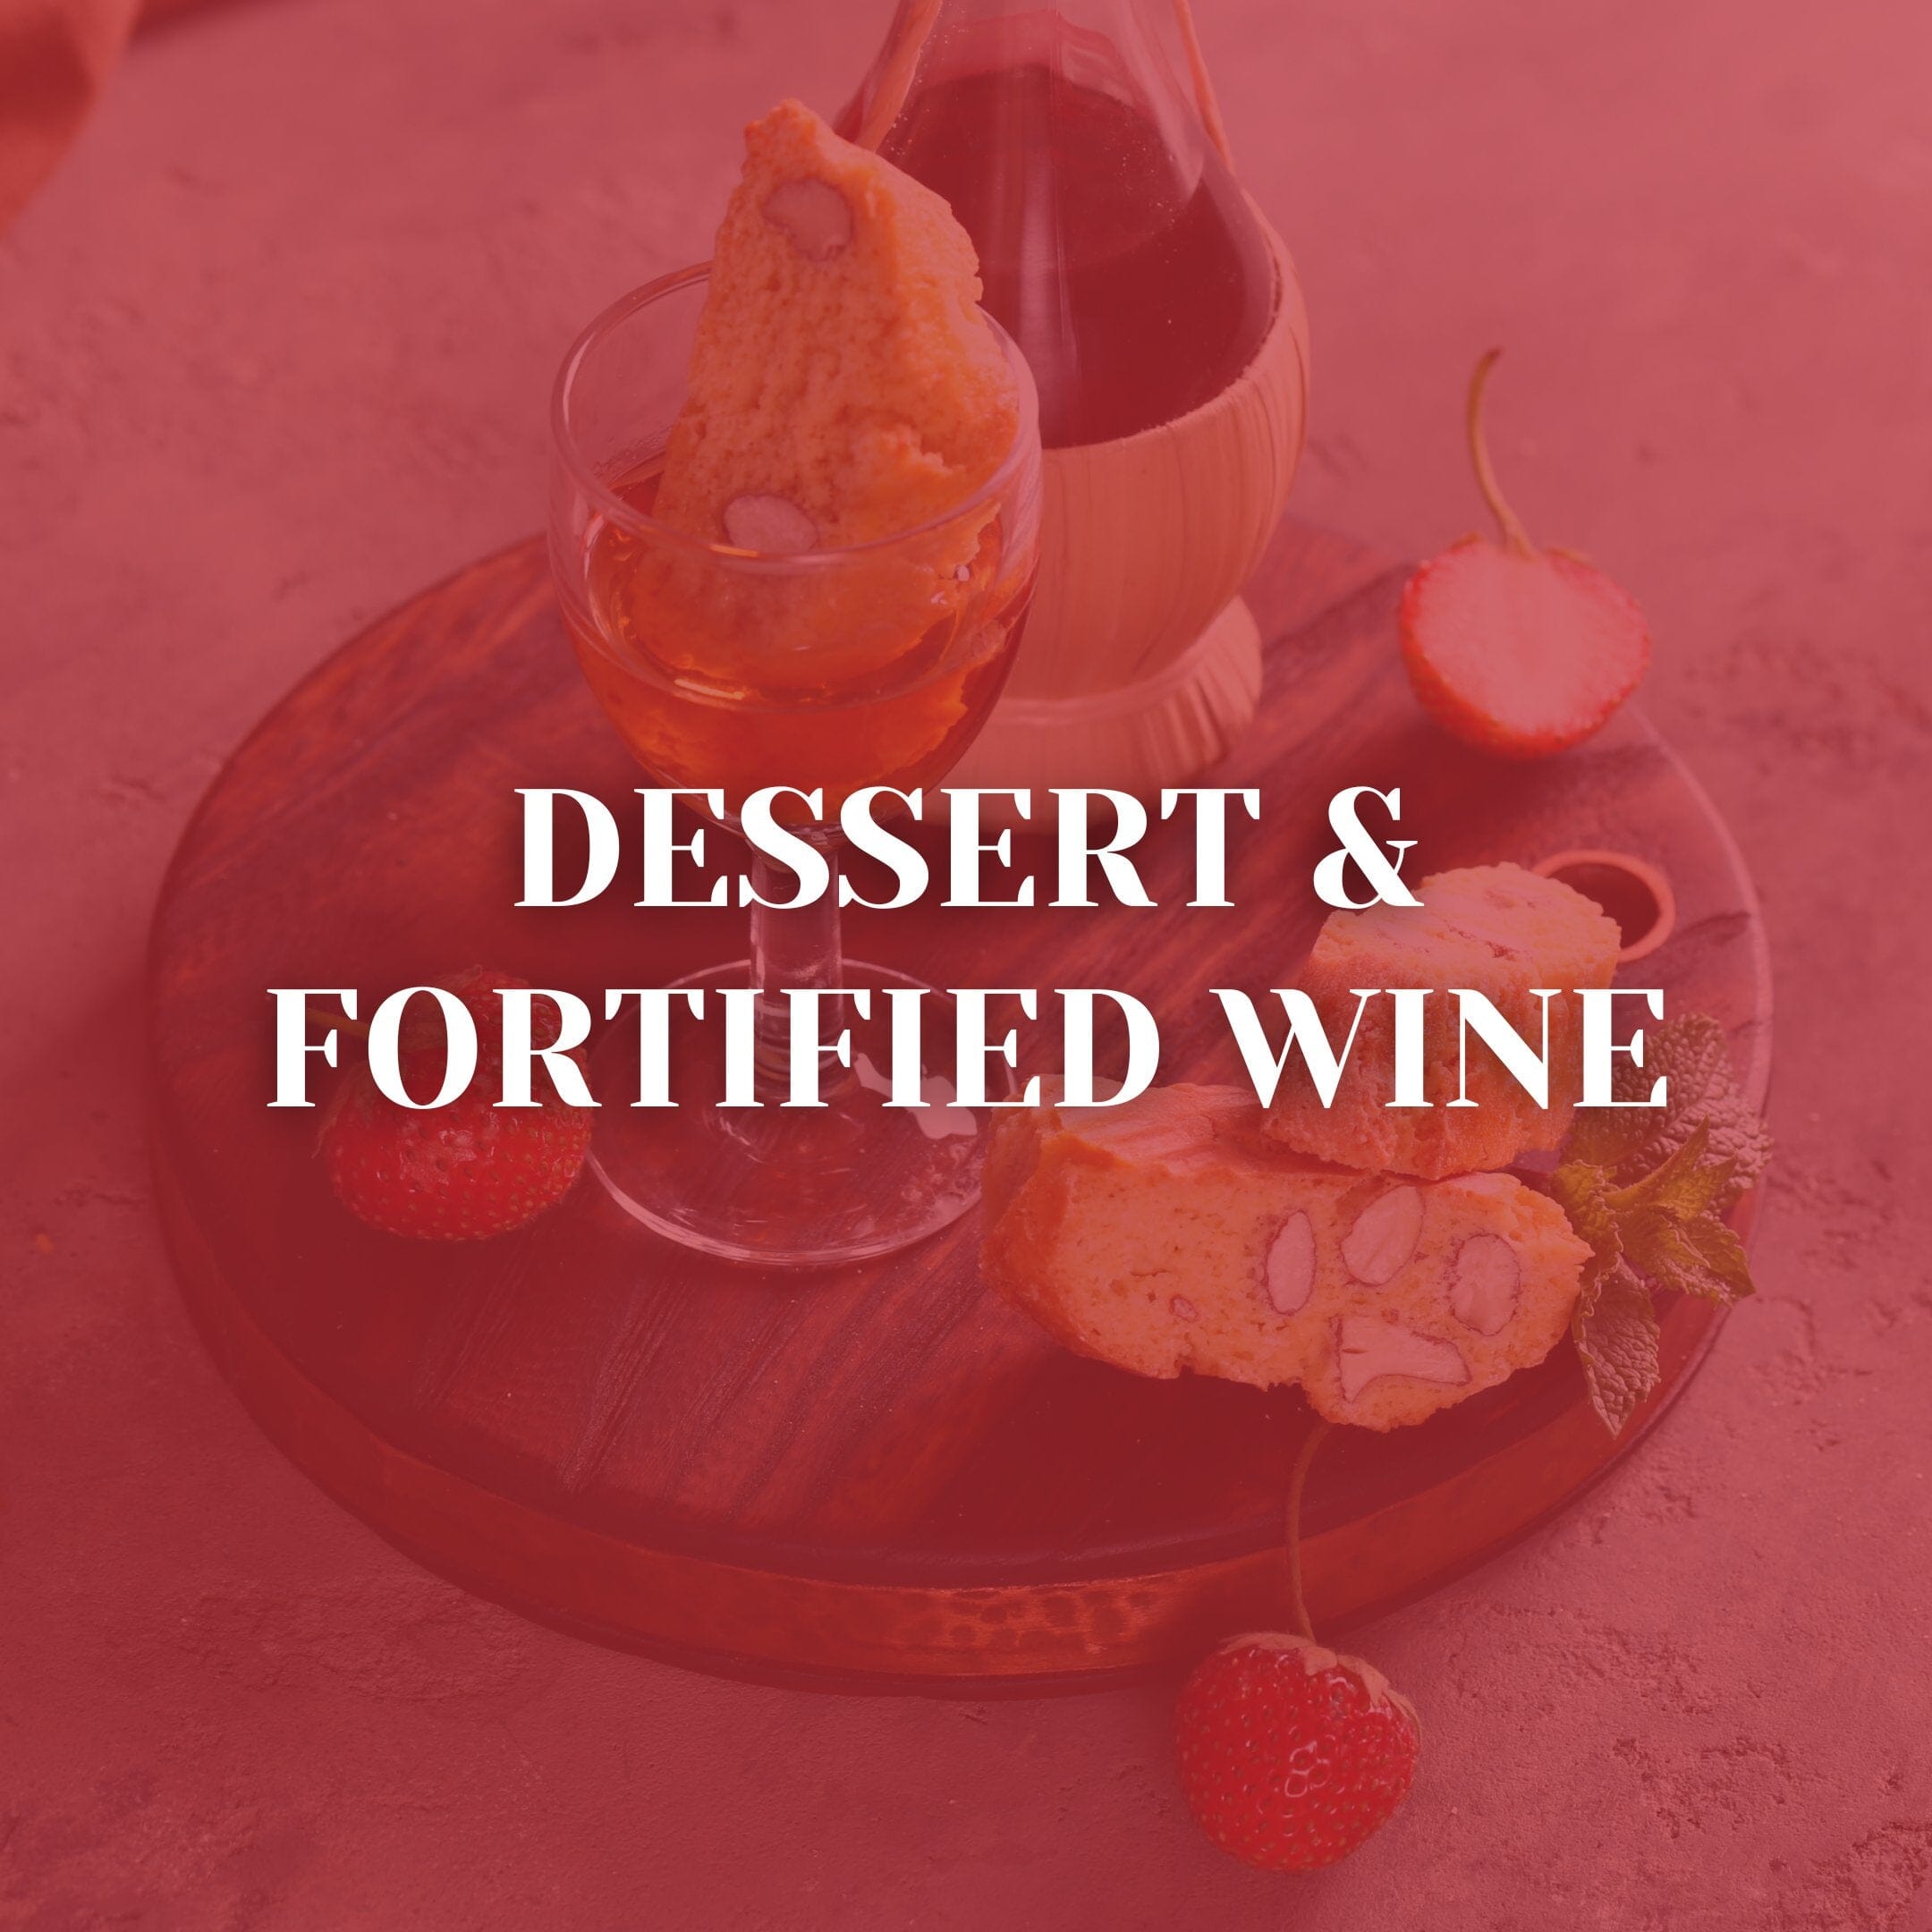 Dessert & Fortified Wines